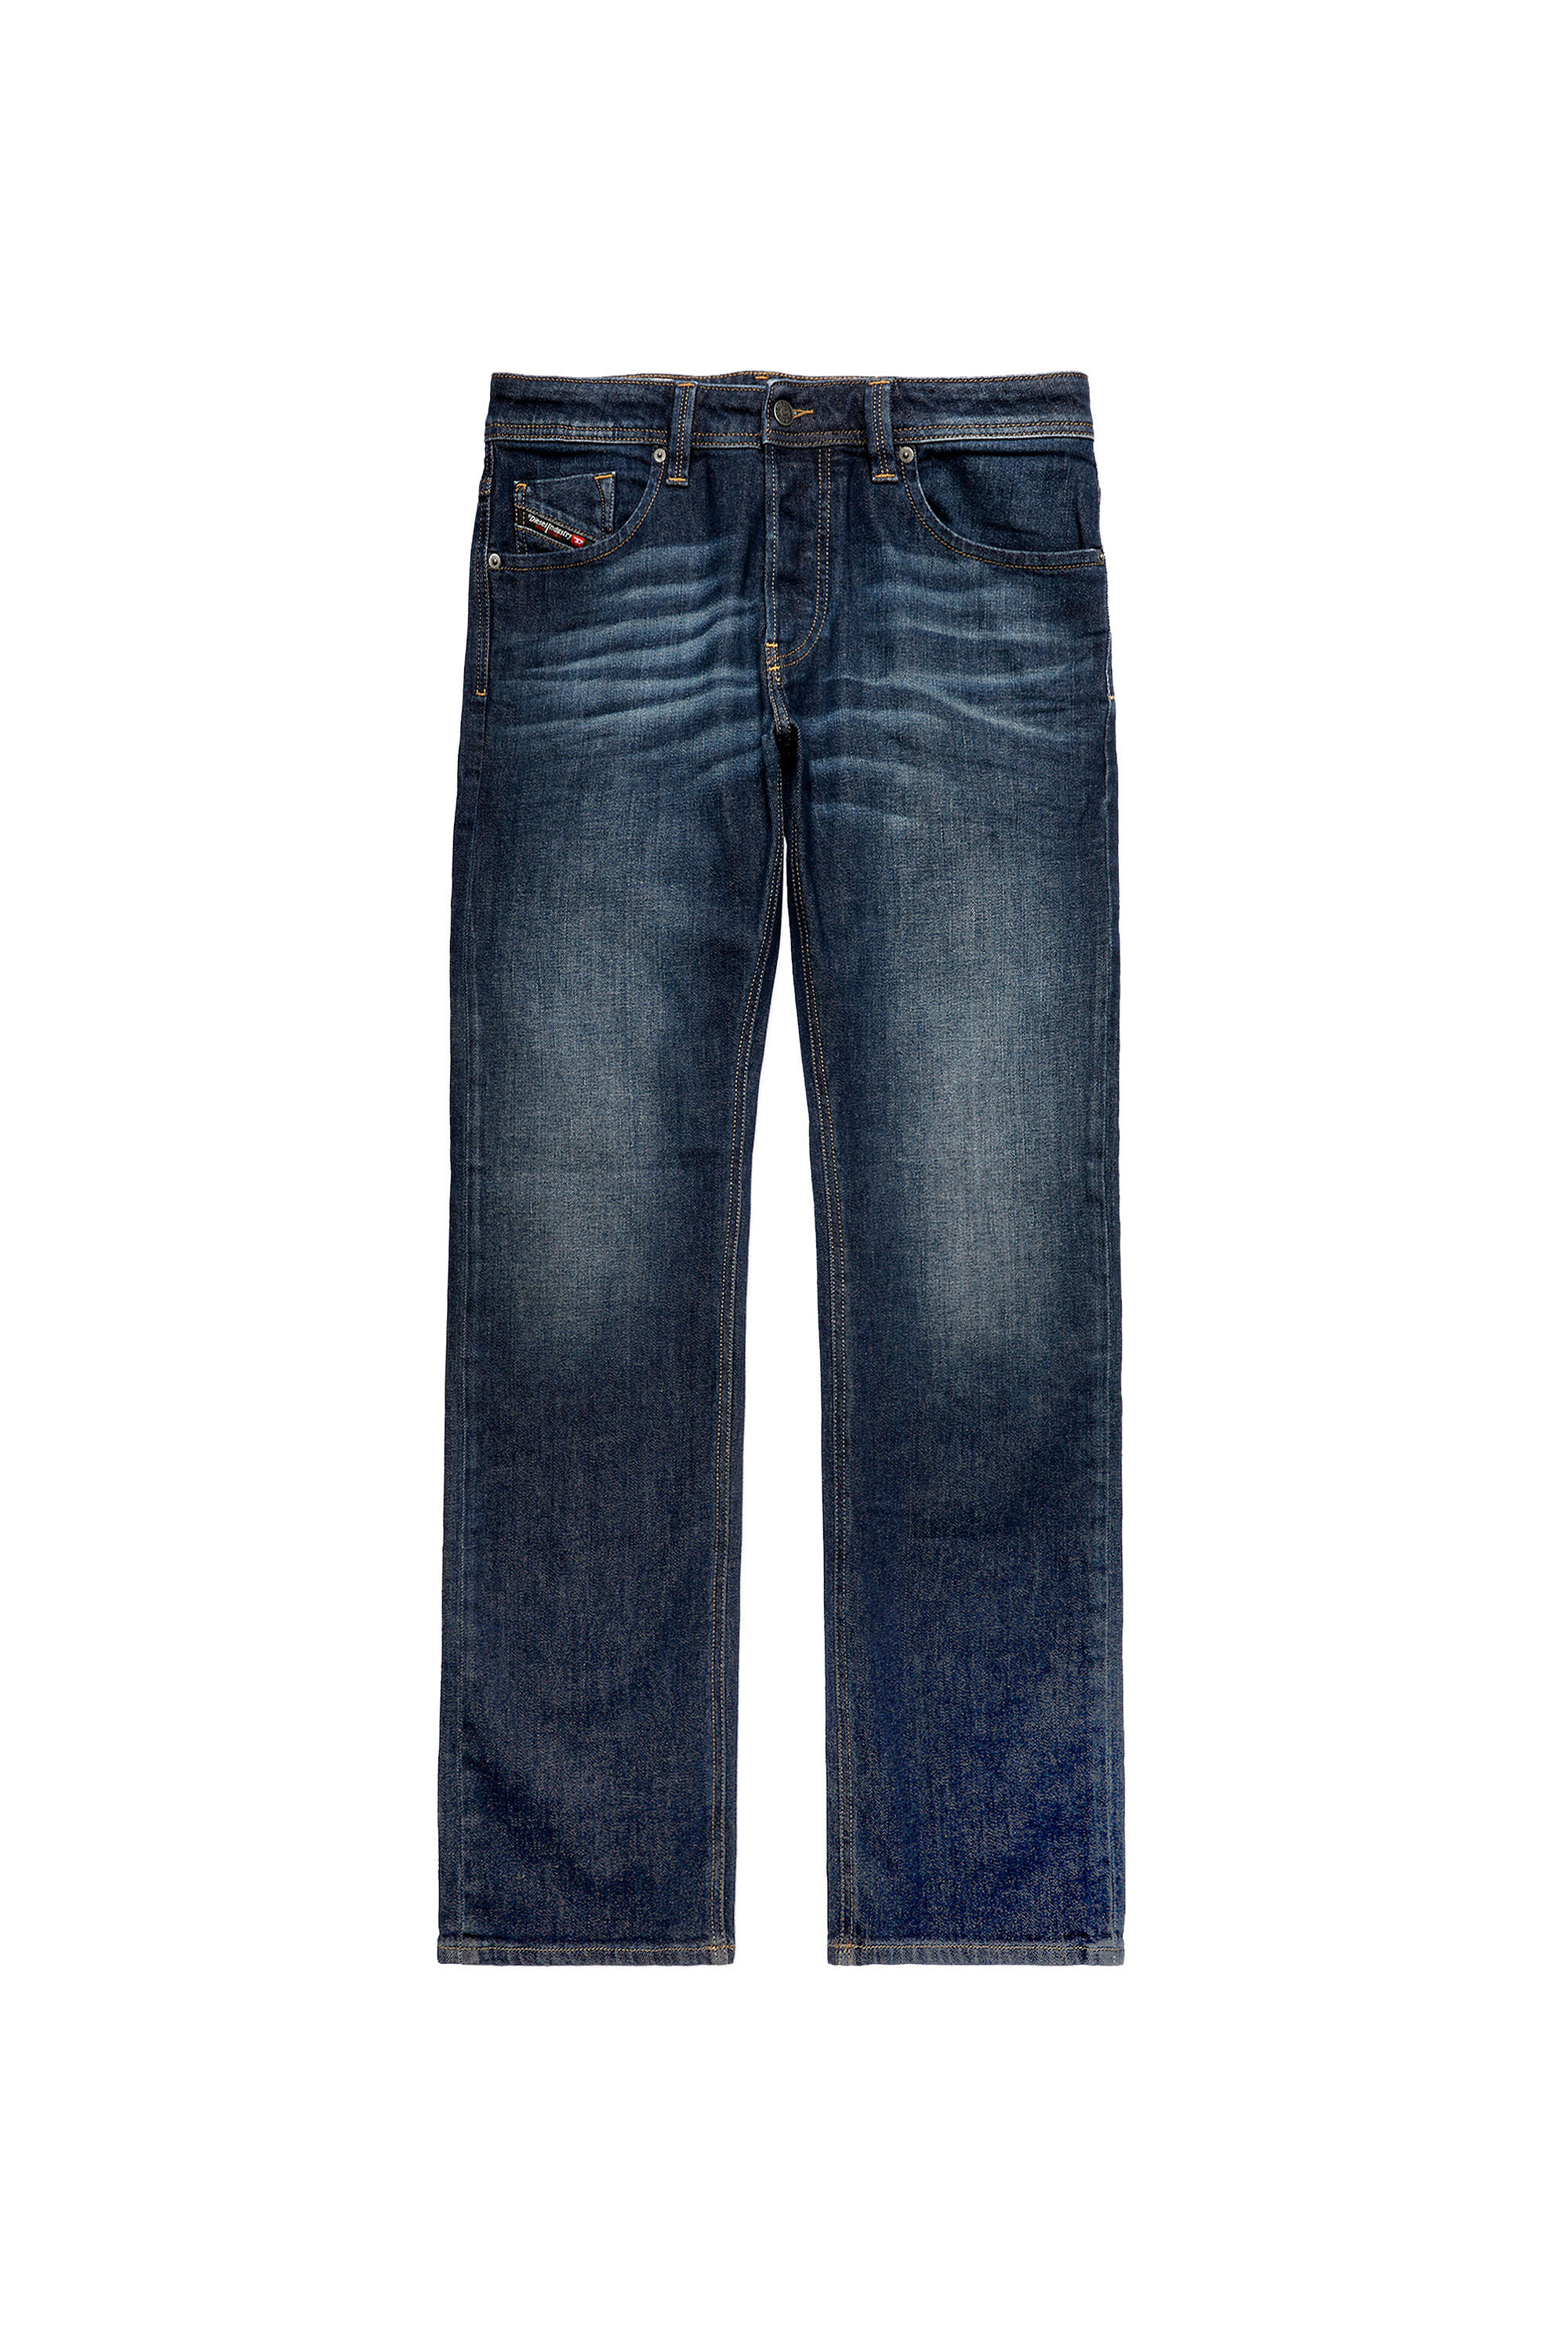 Larkee Straight Jeans 009HN: Dark Blue Wash, Treated, Stretch